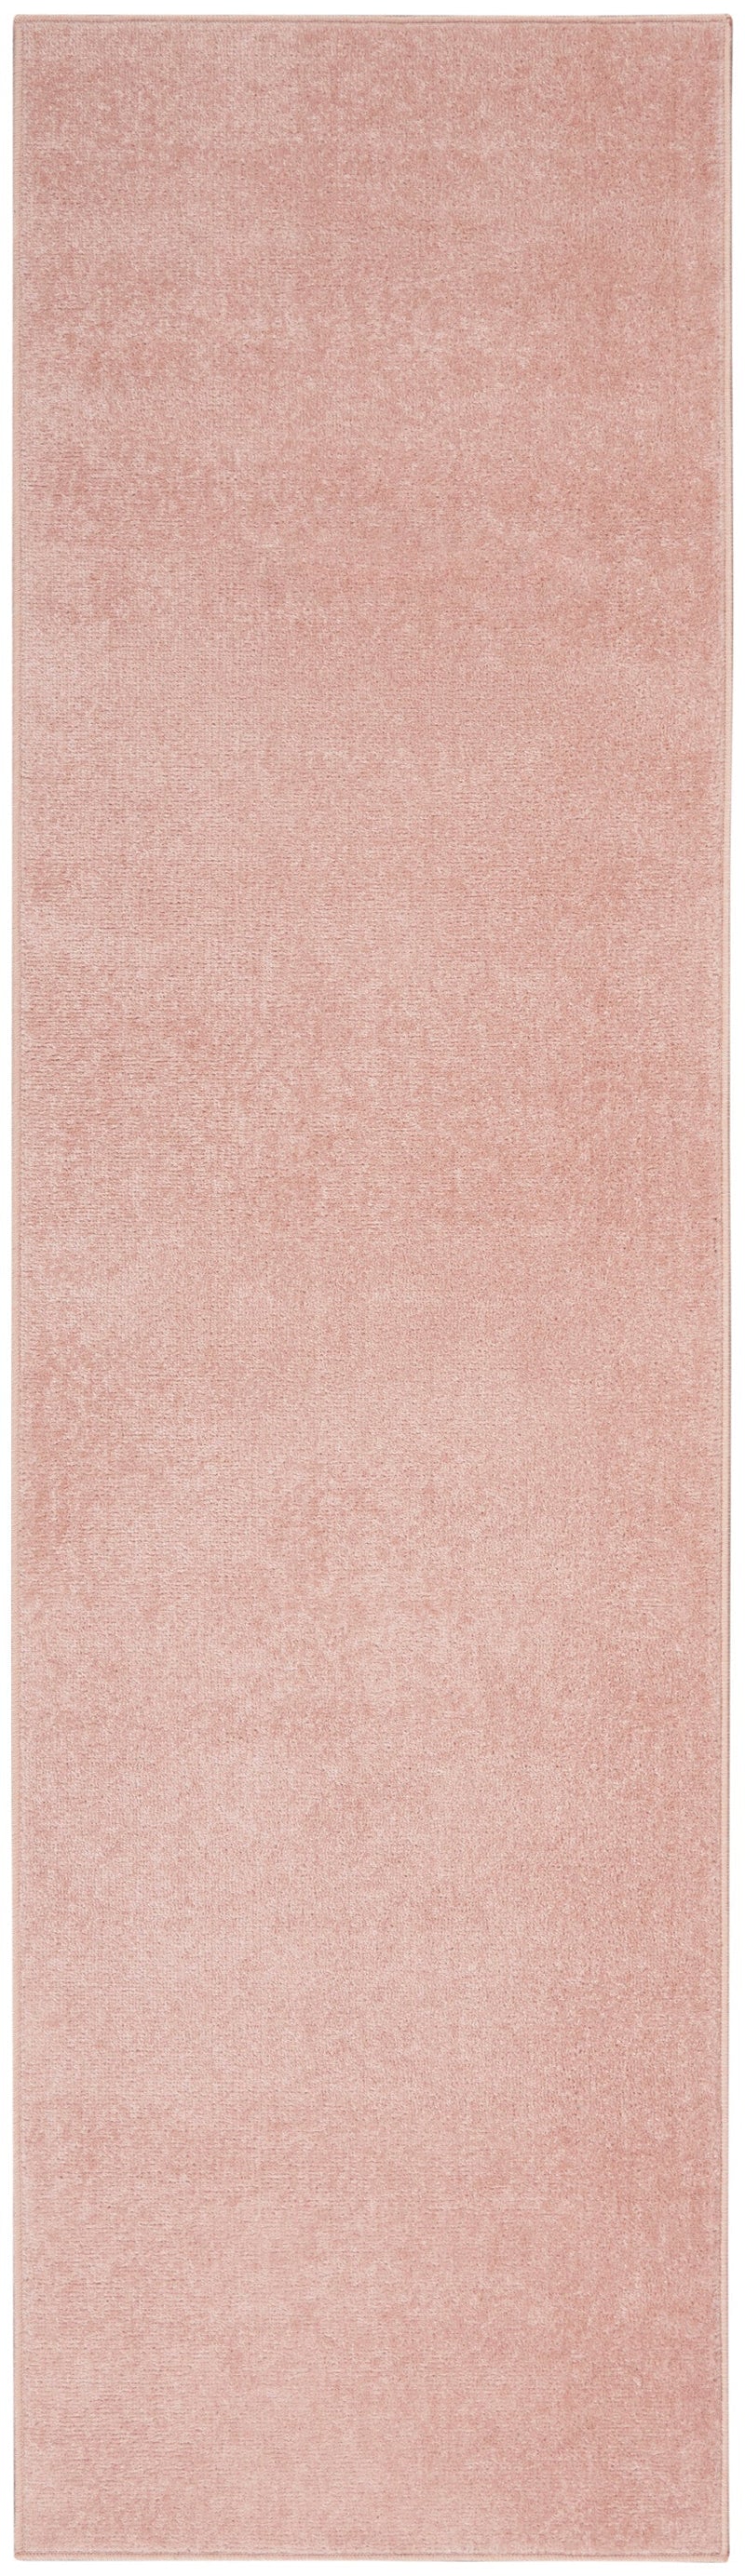 media image for nourison essentials pink rug by nourison 99446824776 redo 4 249